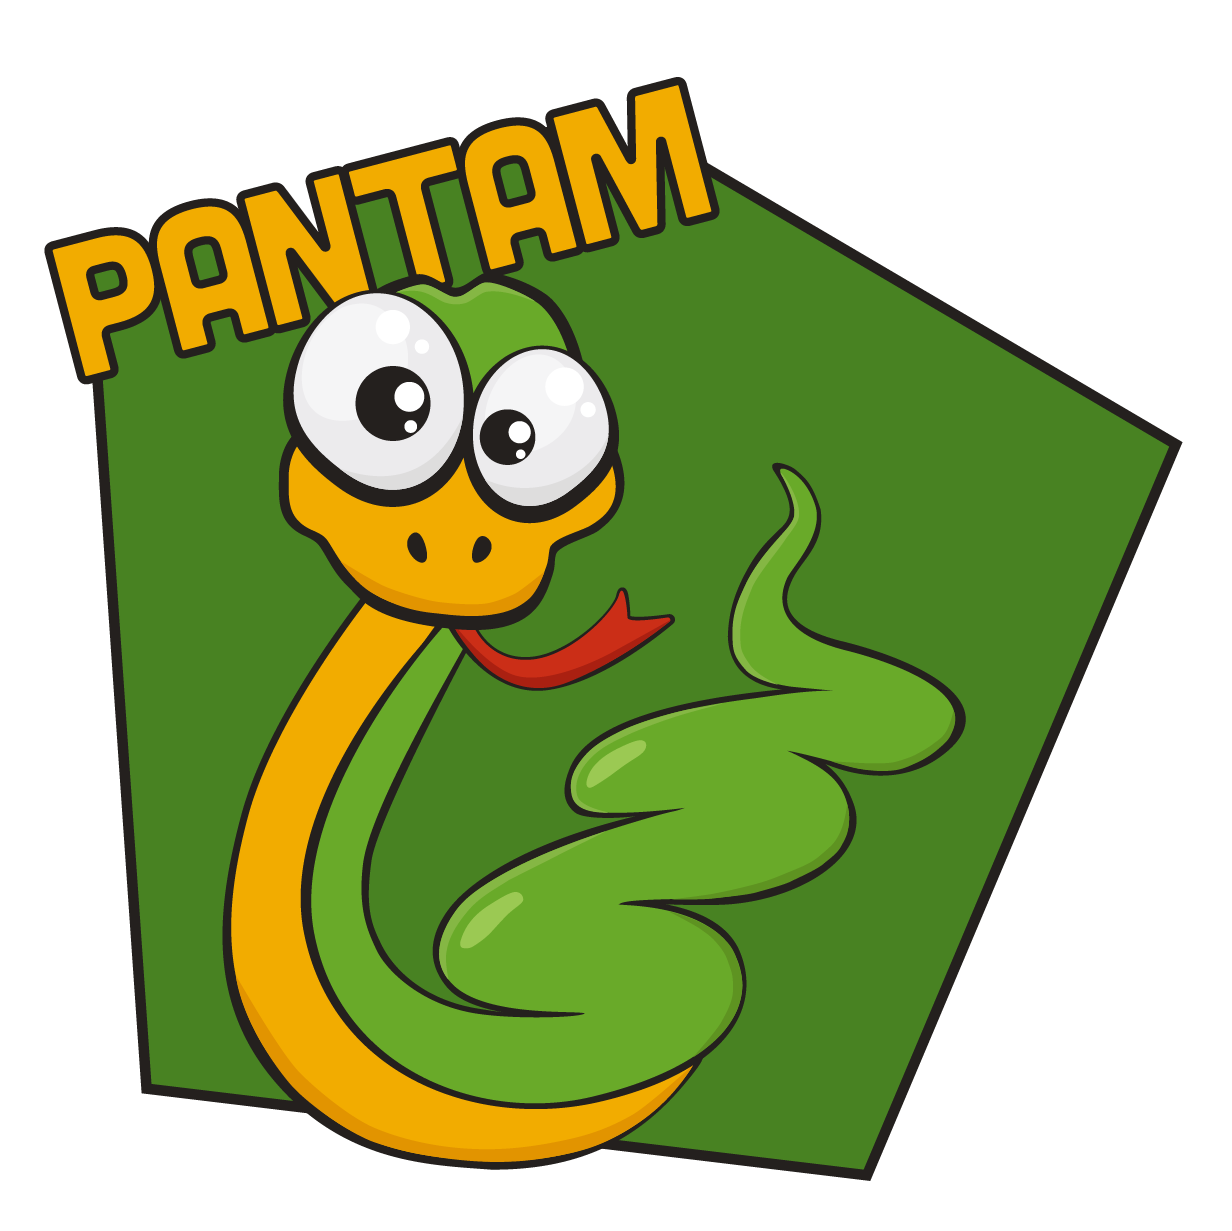 Peter the Pantam Python